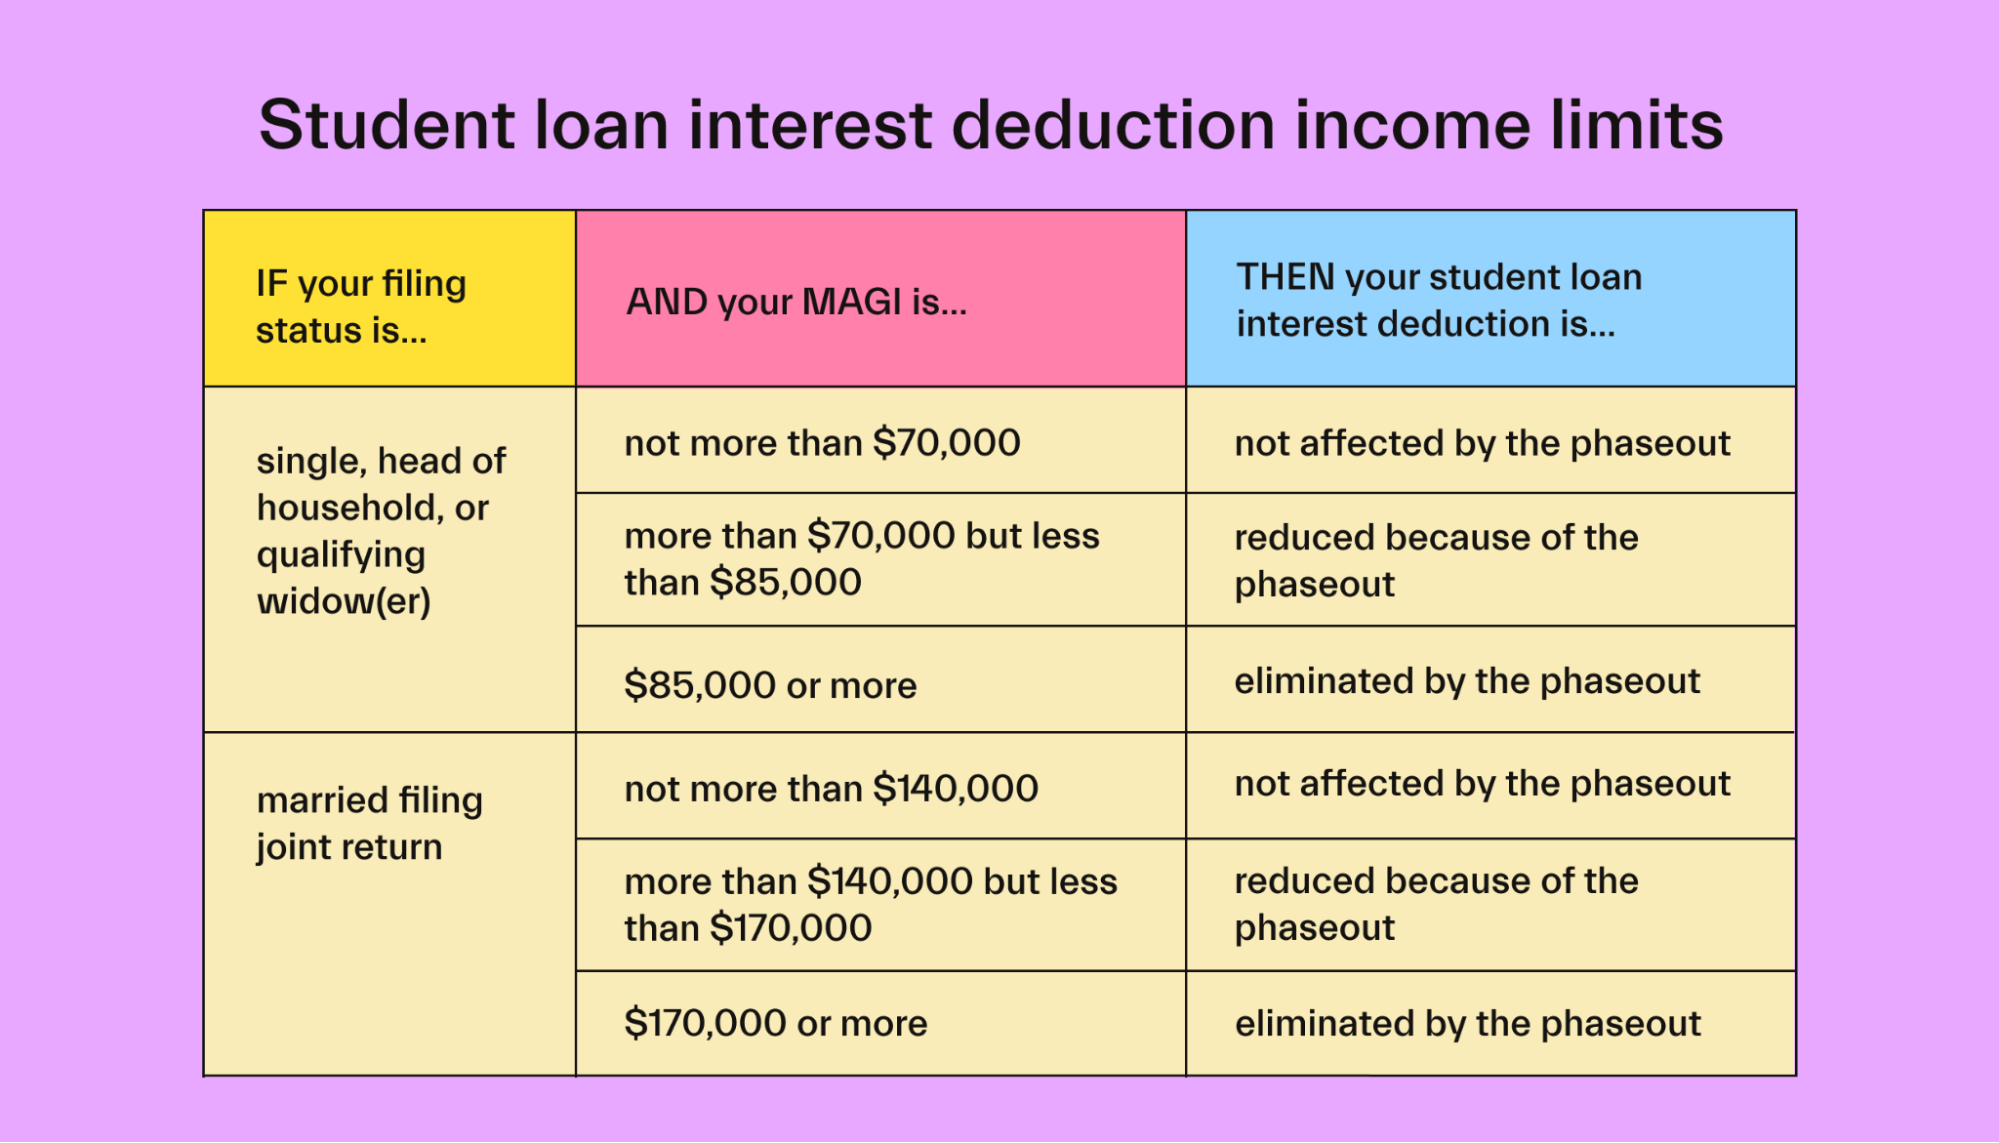 Student loan interest deduction income limits